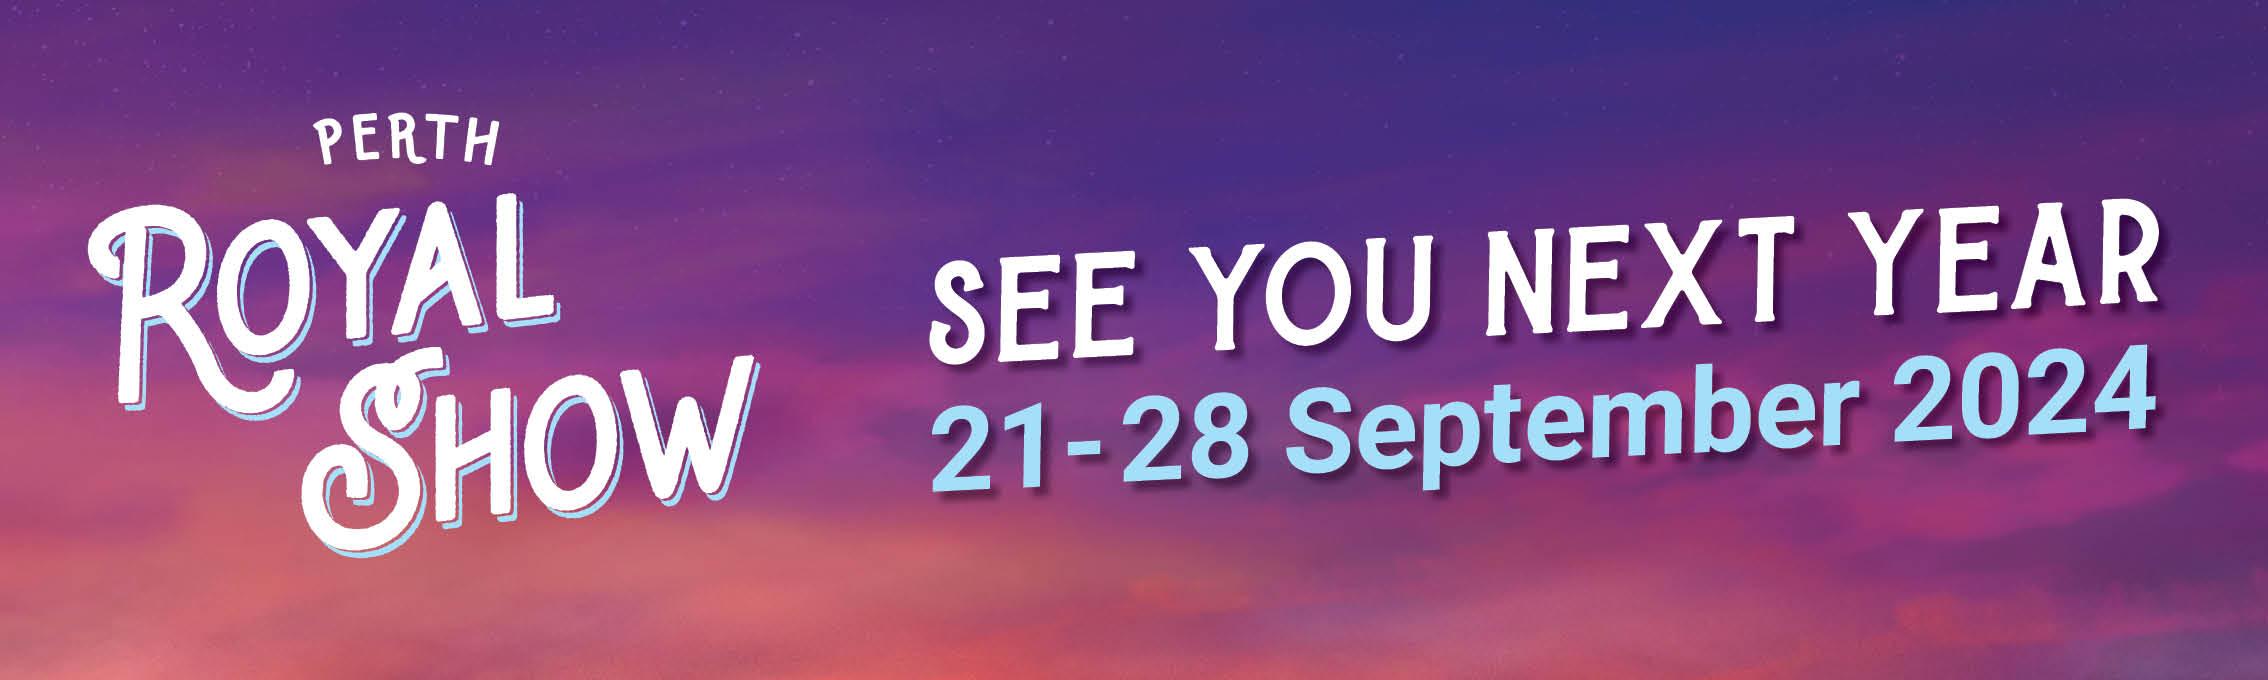 Perth Royal Show | 21- 28 September 2024